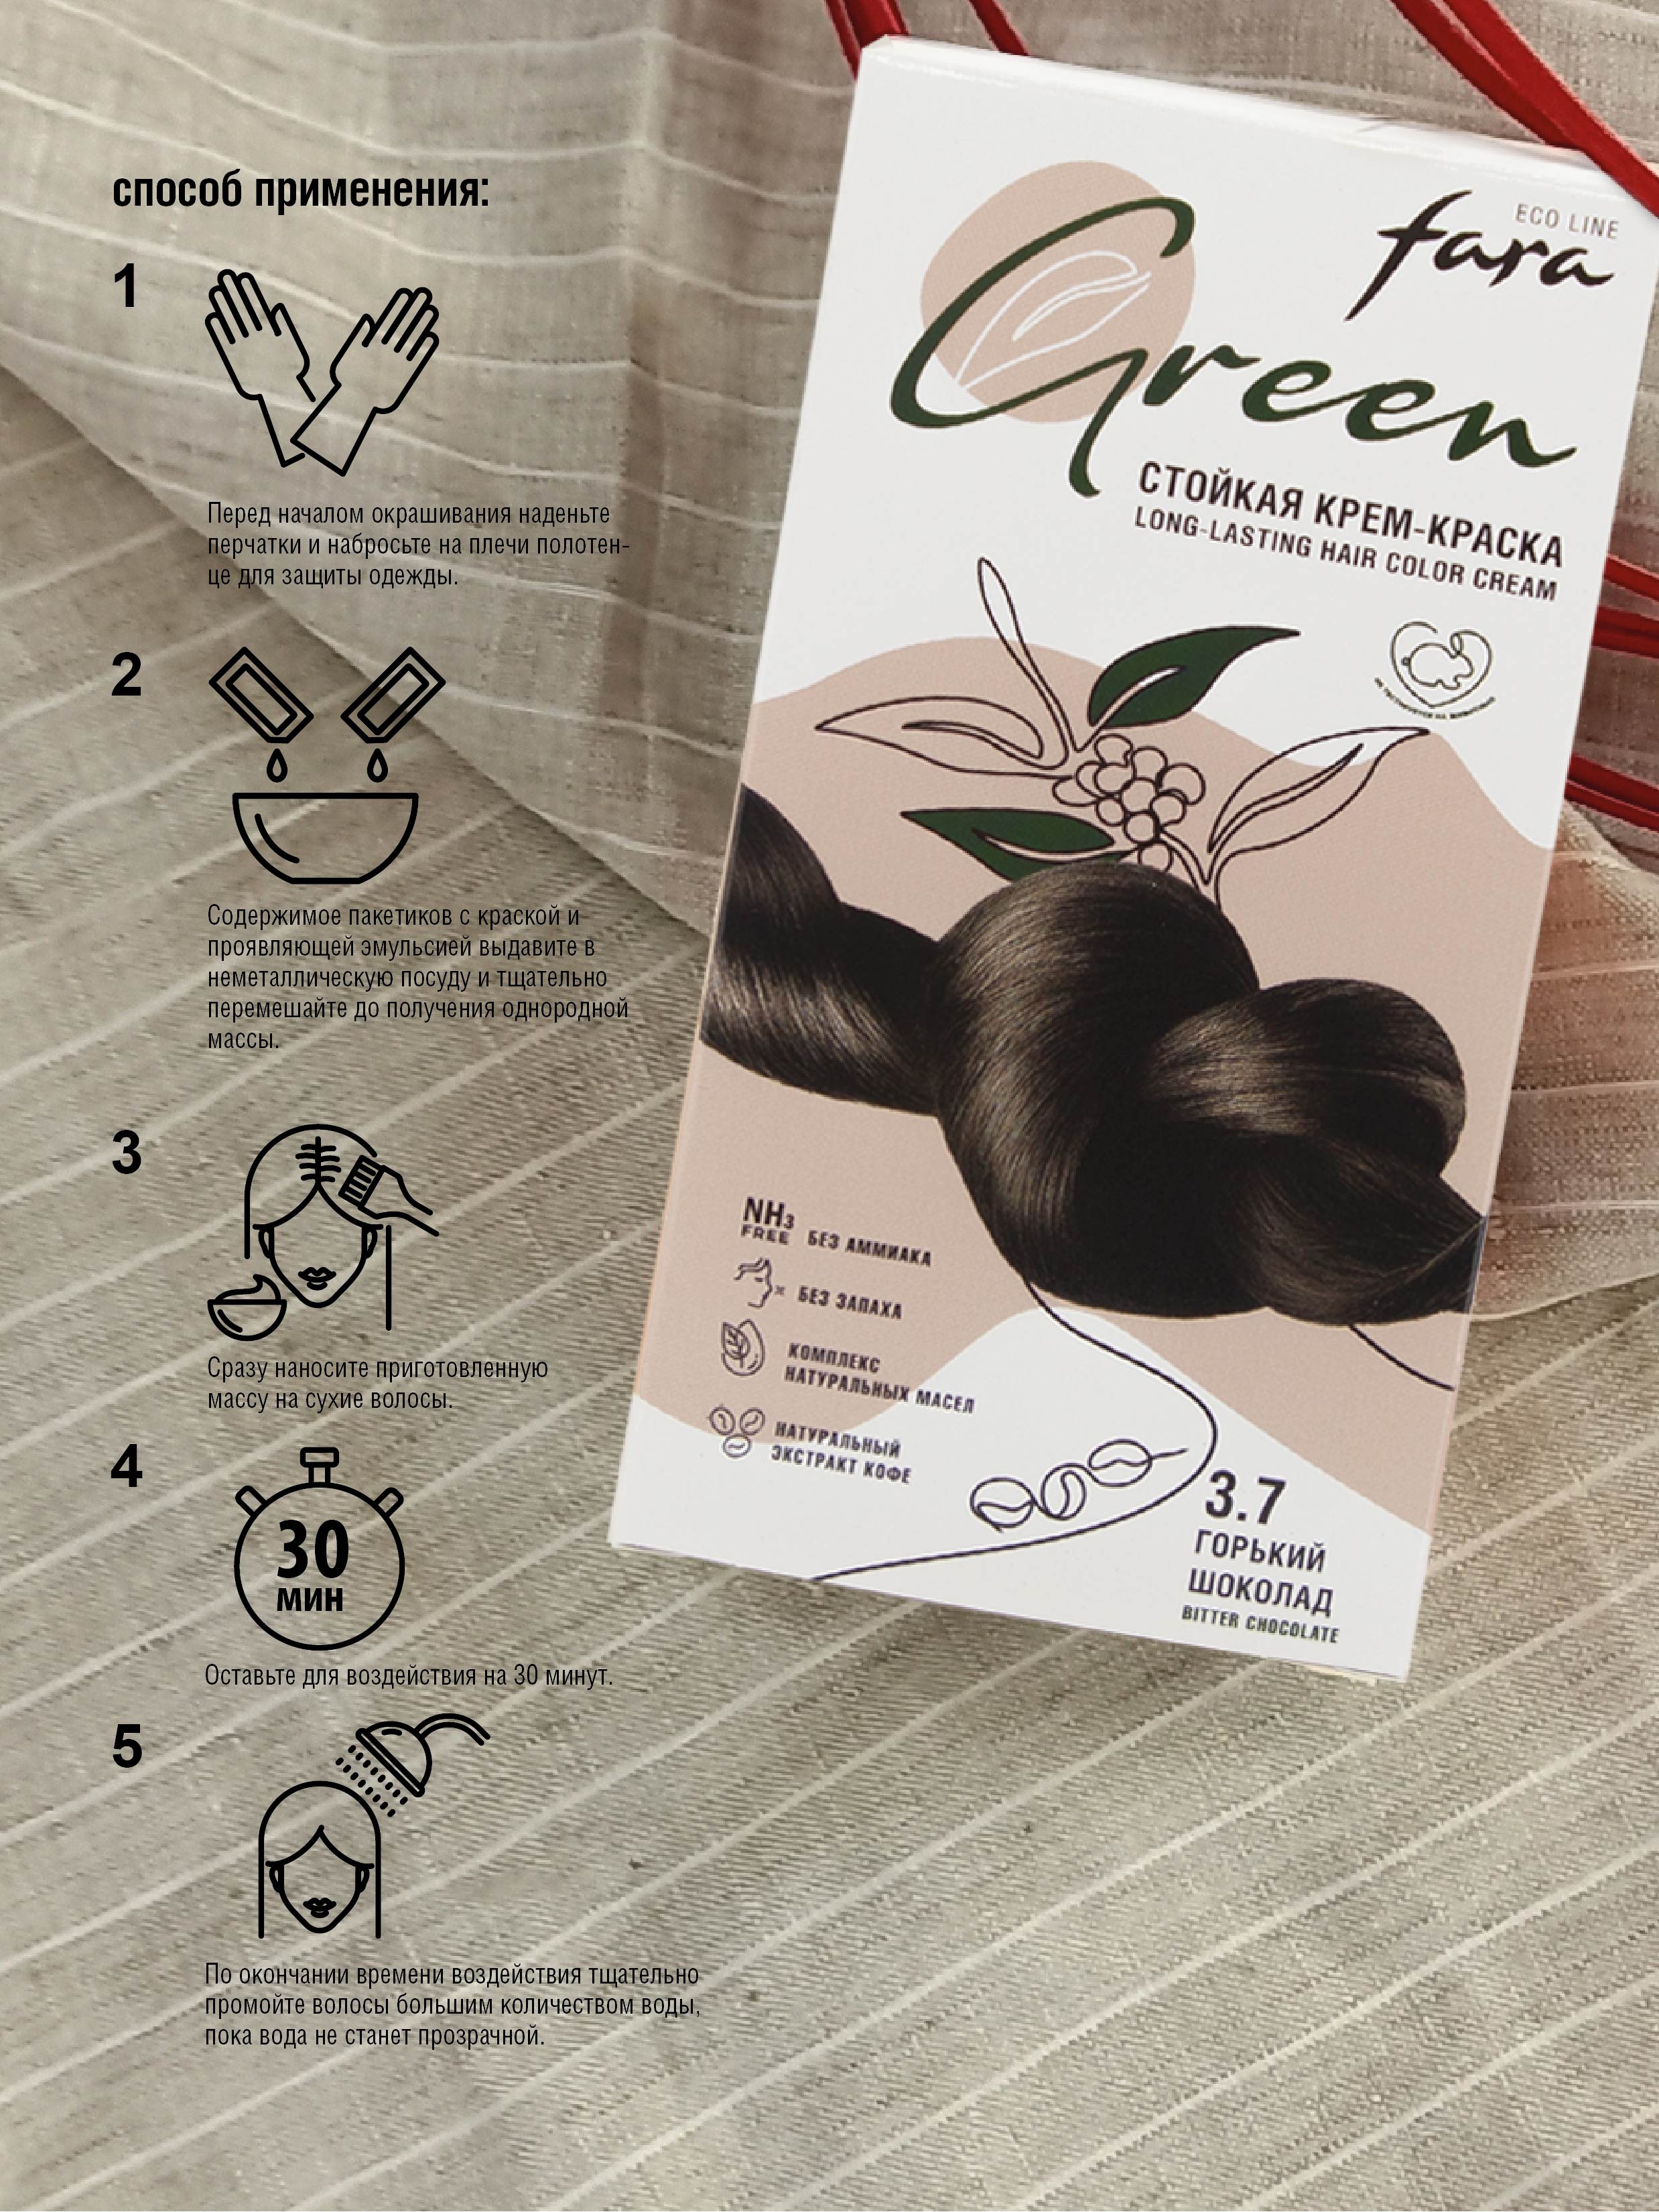 Краска для волос безаммиачная FARA Eco Line Green 3.7 горький шоколад - фото 6